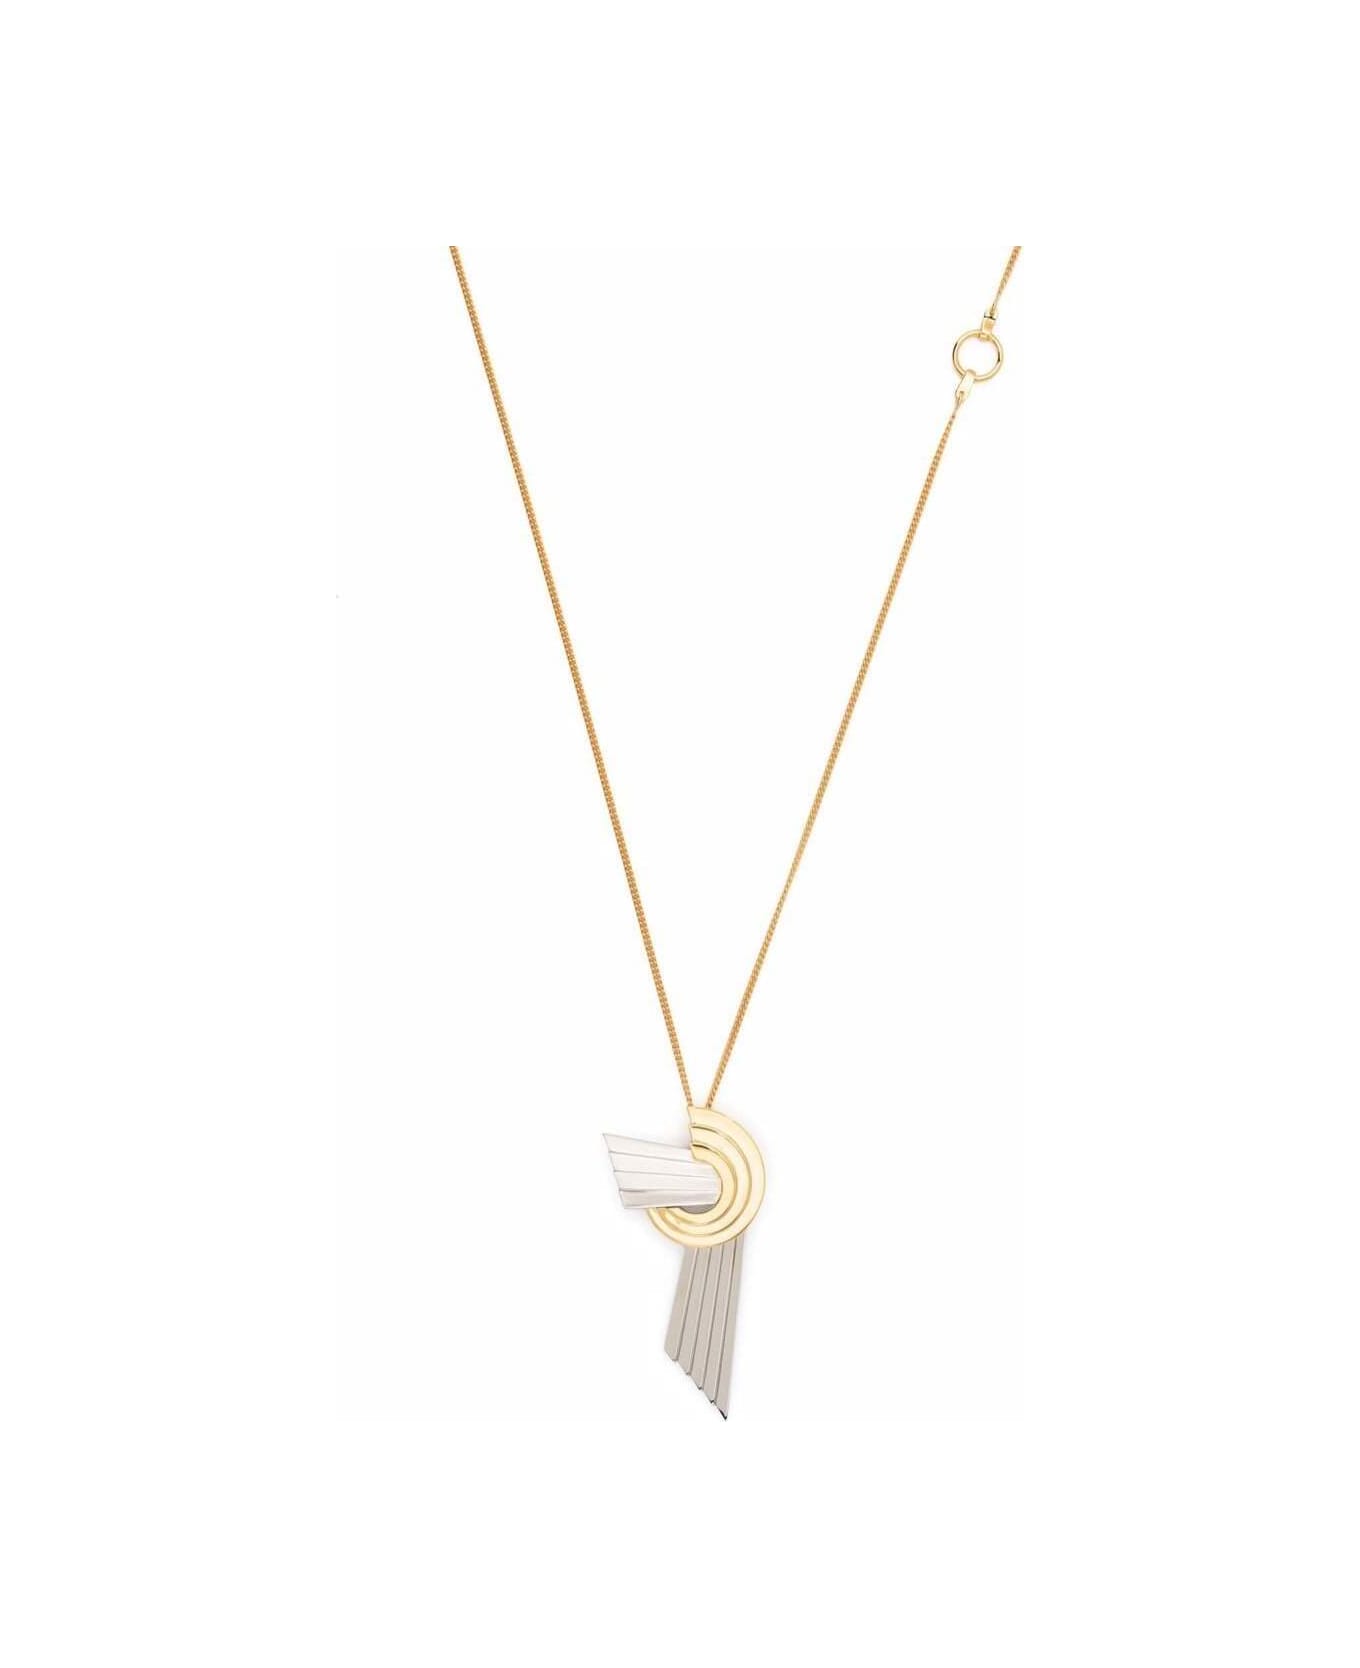 Leda Madera Meryl Brass Necklace With Pendant Detail - Metallic ネックレス